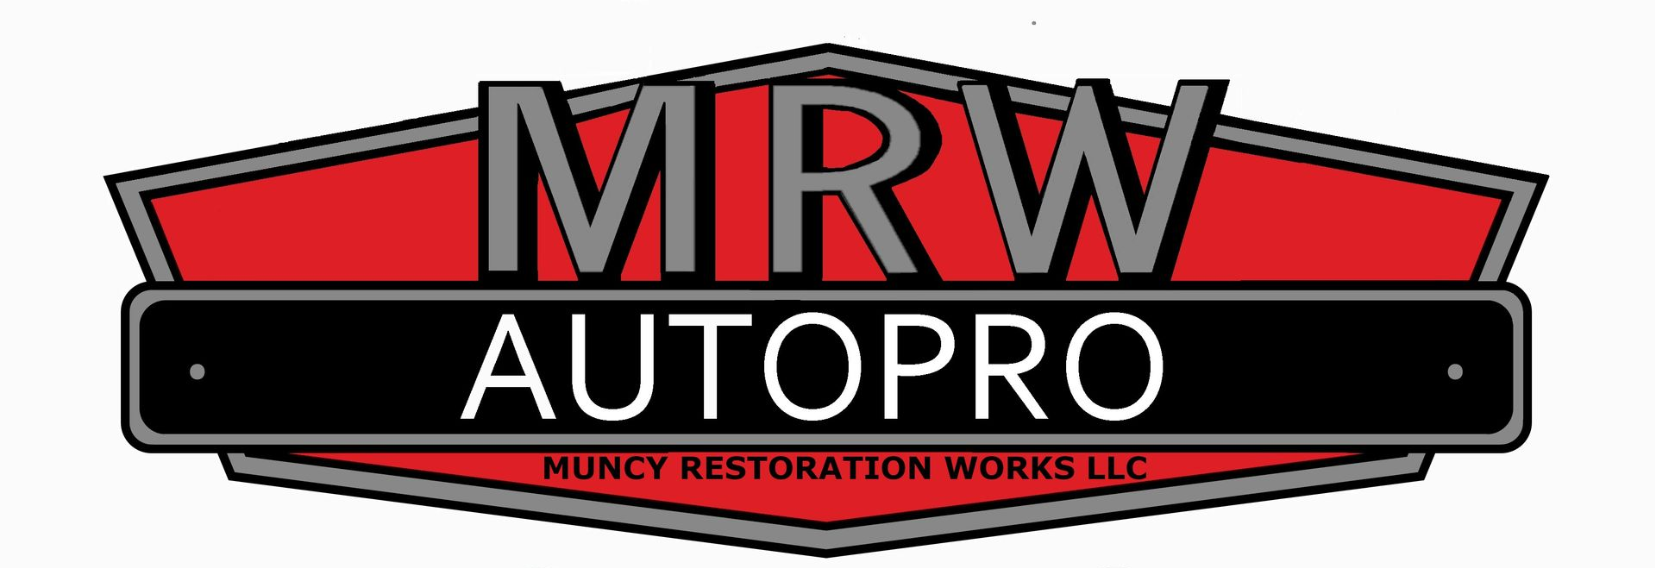 MRW Auto Pro Division of Muncy Restoration Works - Logo